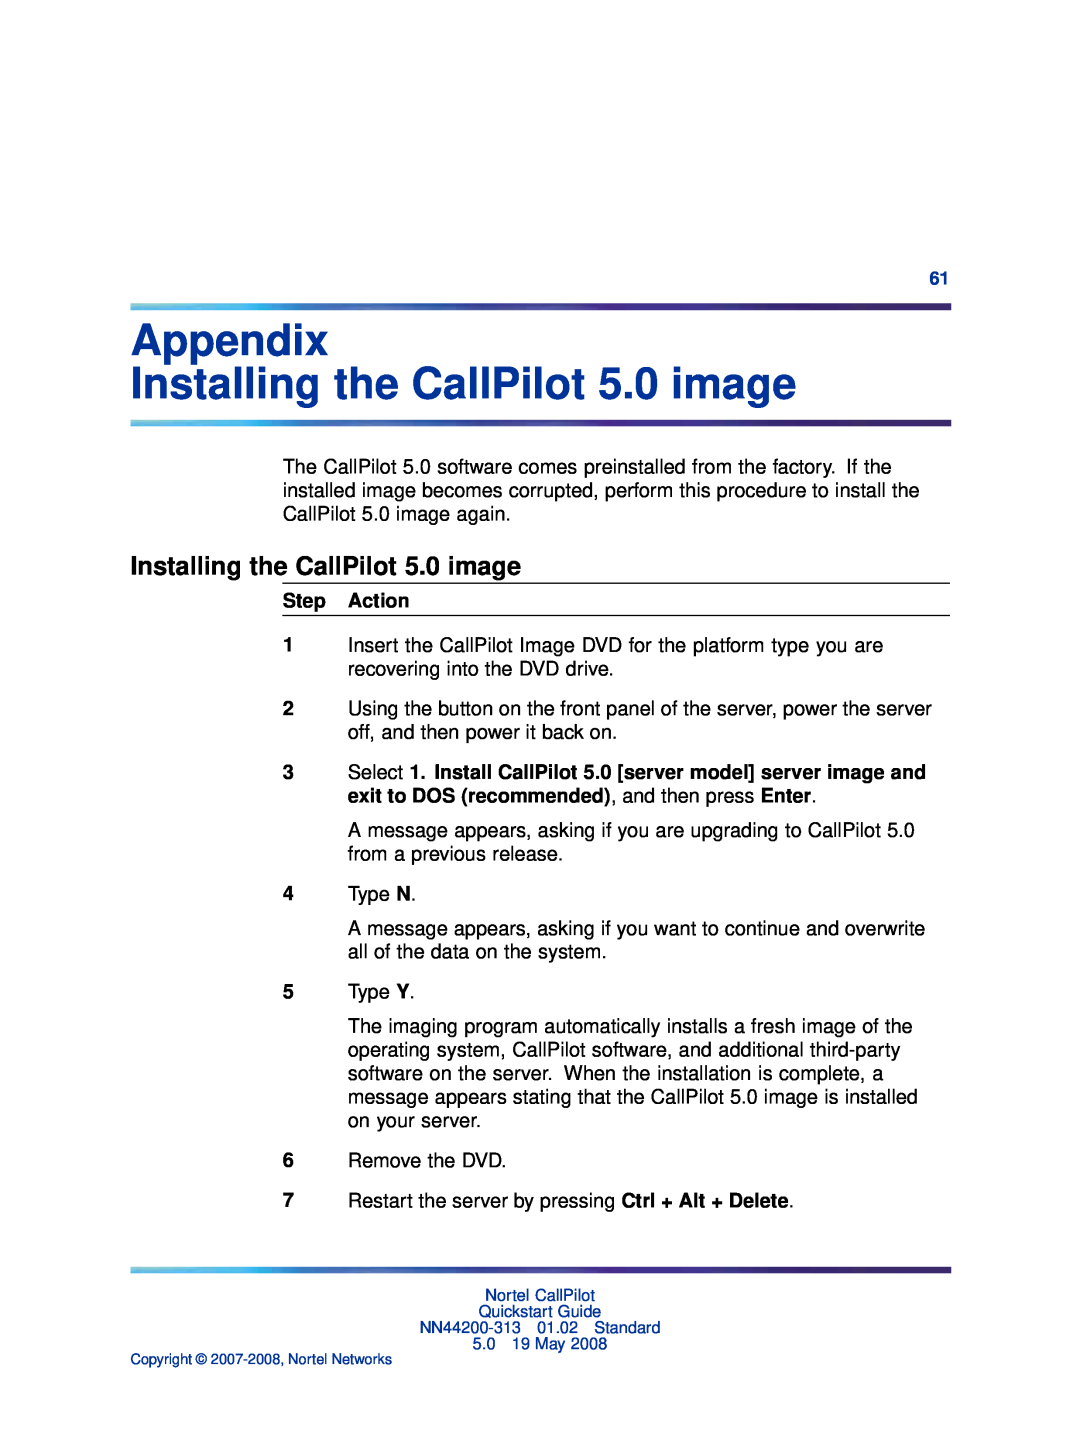 Nortel Networks NN44200-313 quick start Appendix Installing the CallPilot 5.0 image, Step Action 